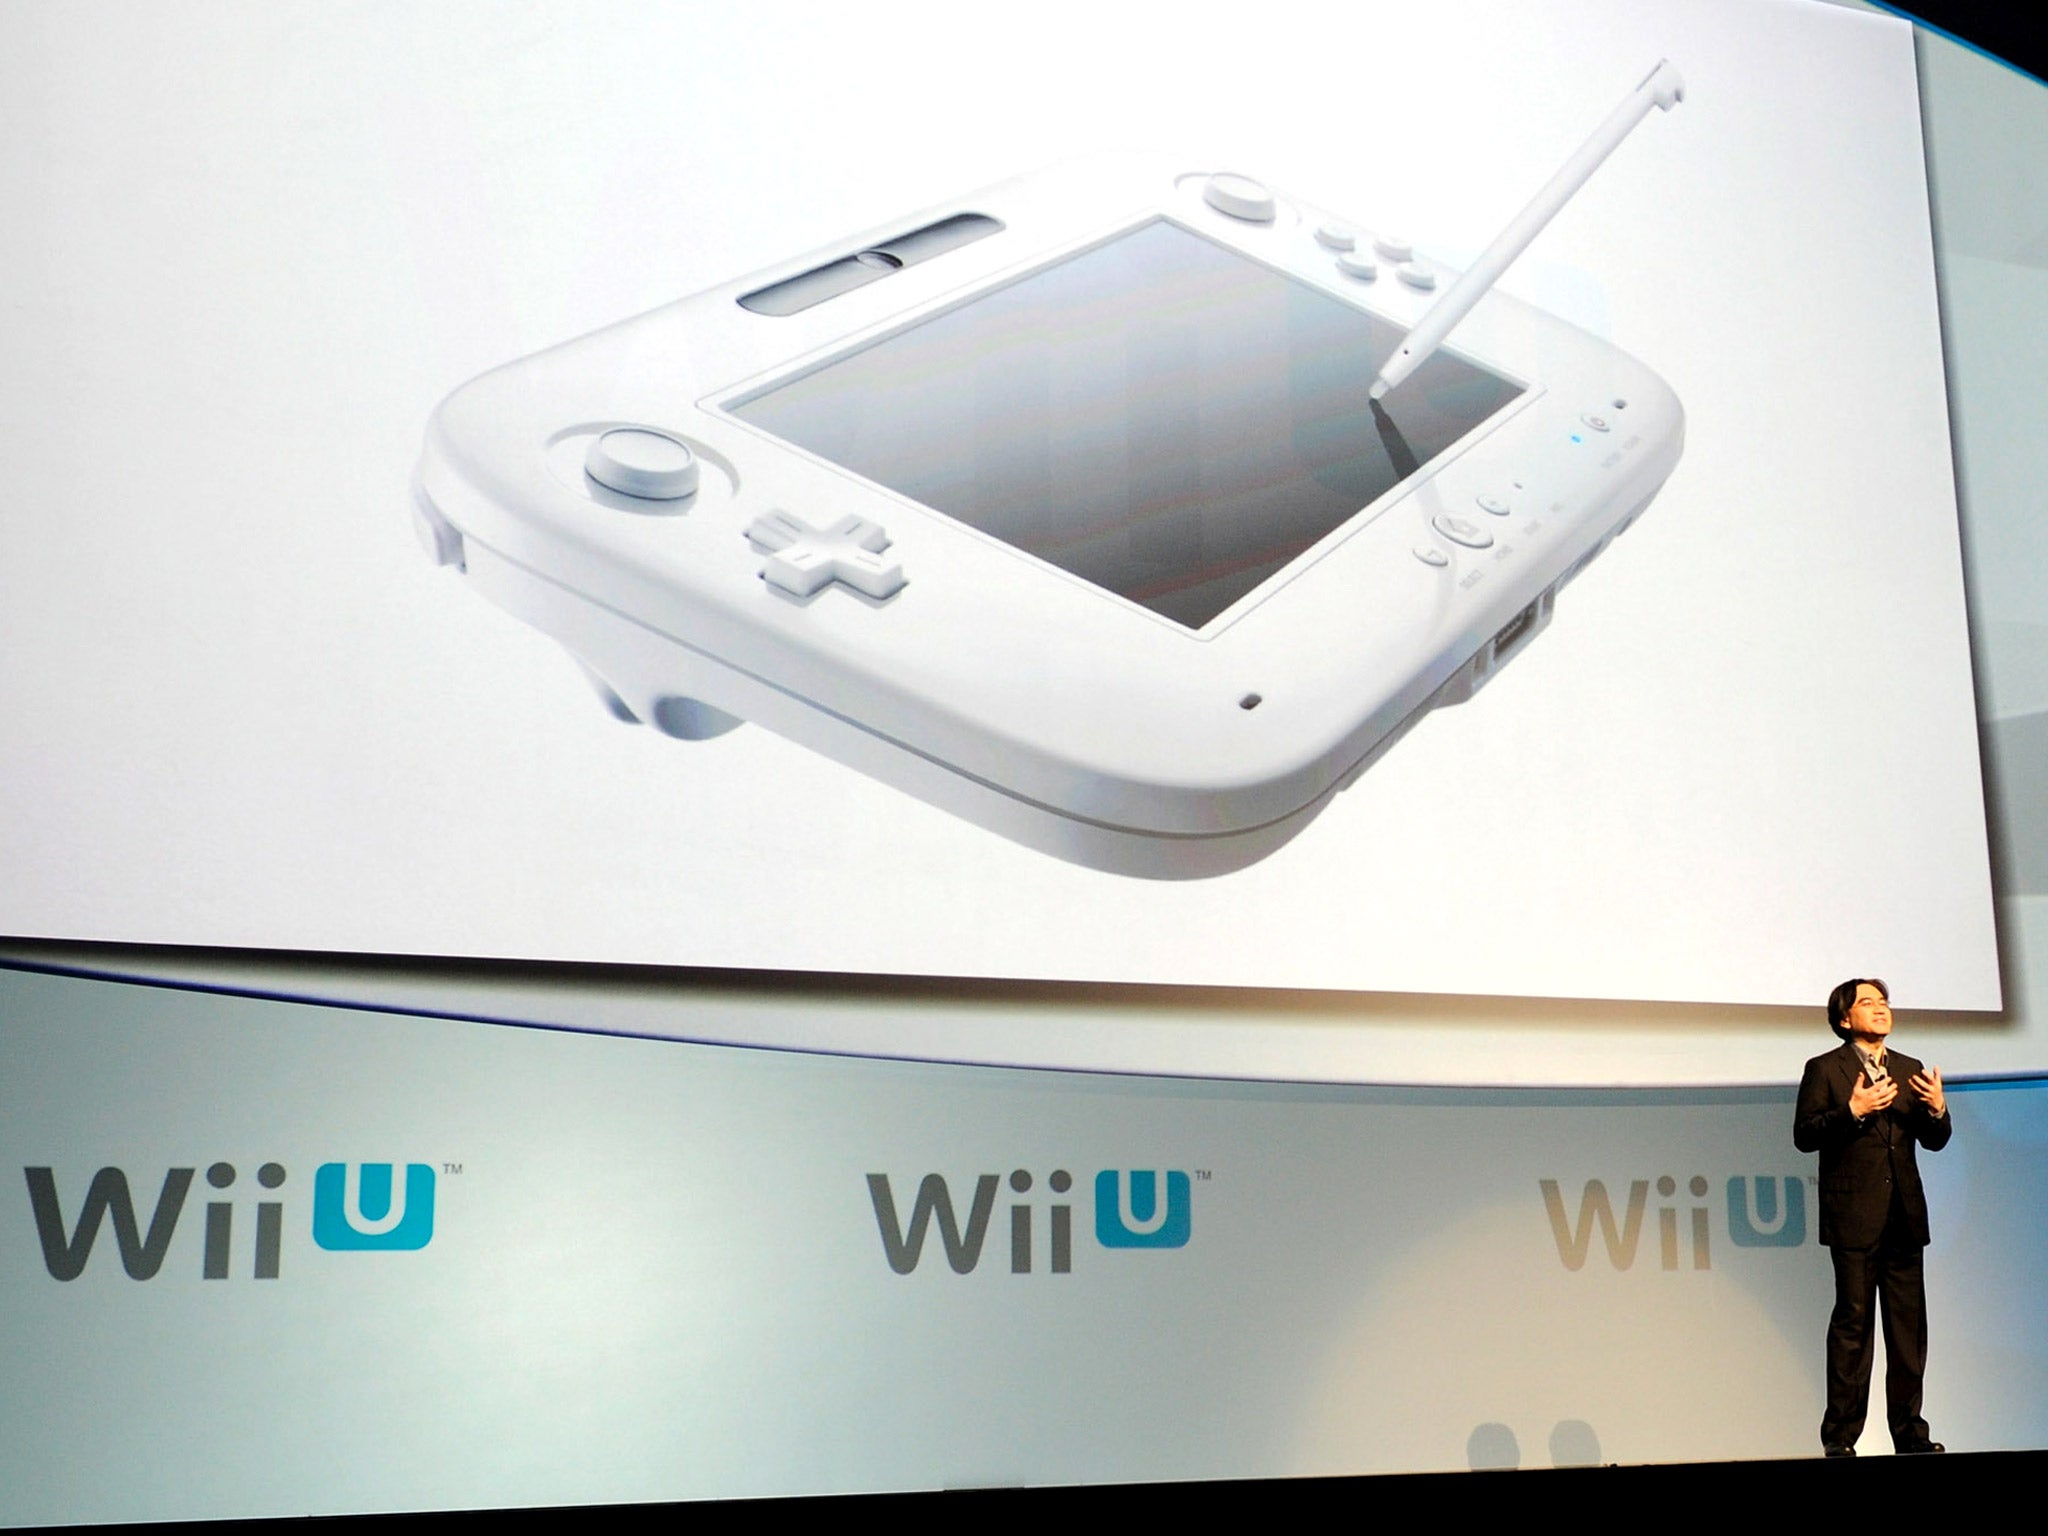 Nintendo president Satoru Iwata unveiling the Wii U in 2011